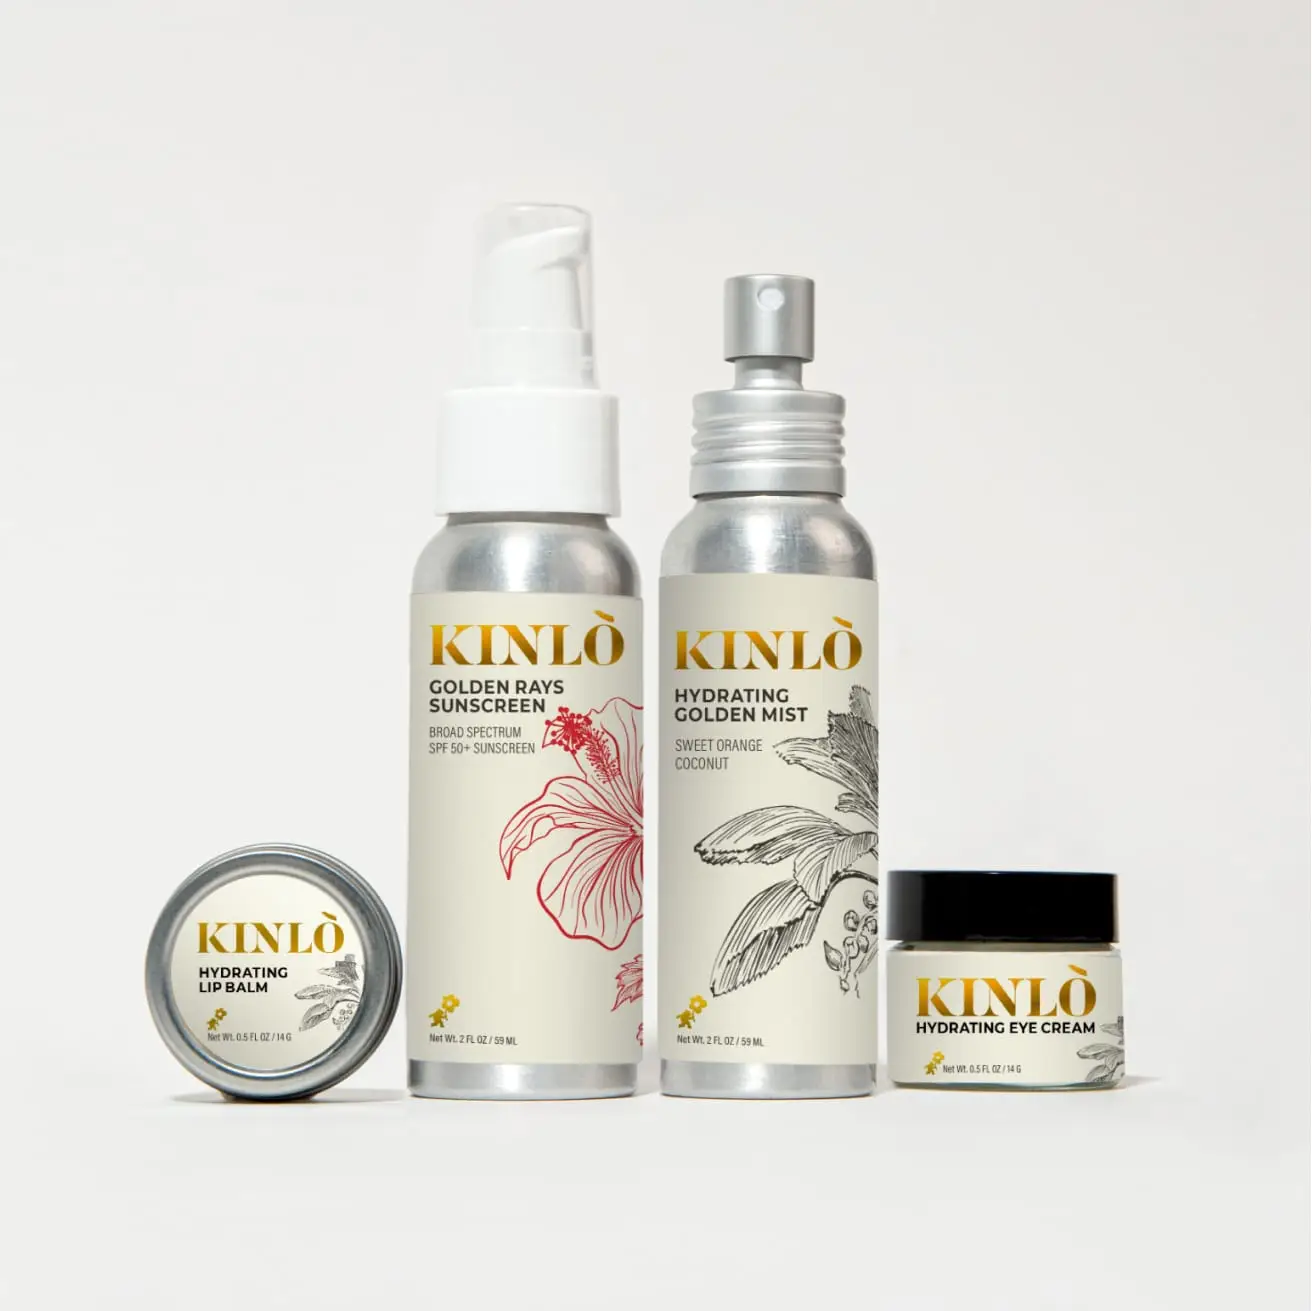 KINLO Golden Ritual Skincare Set Product Image 1.jpg